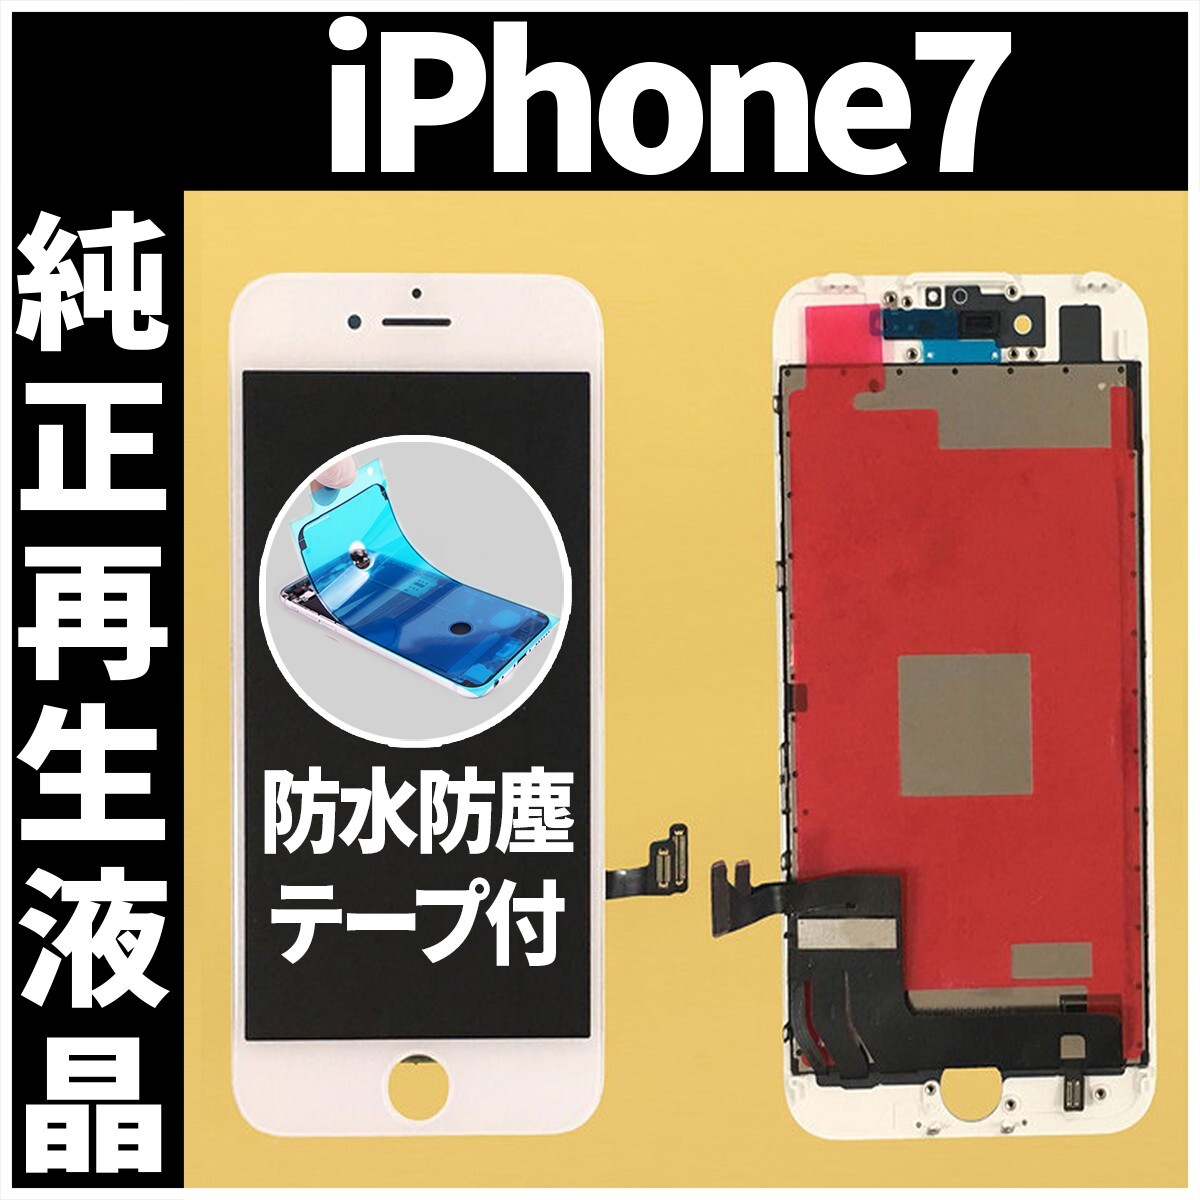 iPhone7 純正再生品 フロントパネル 白 純正液晶 自社再生 業者 LCD 交換 リペア 画面割れ iphone 修理 ガラス割れ 防水テープ付 工具無の画像1